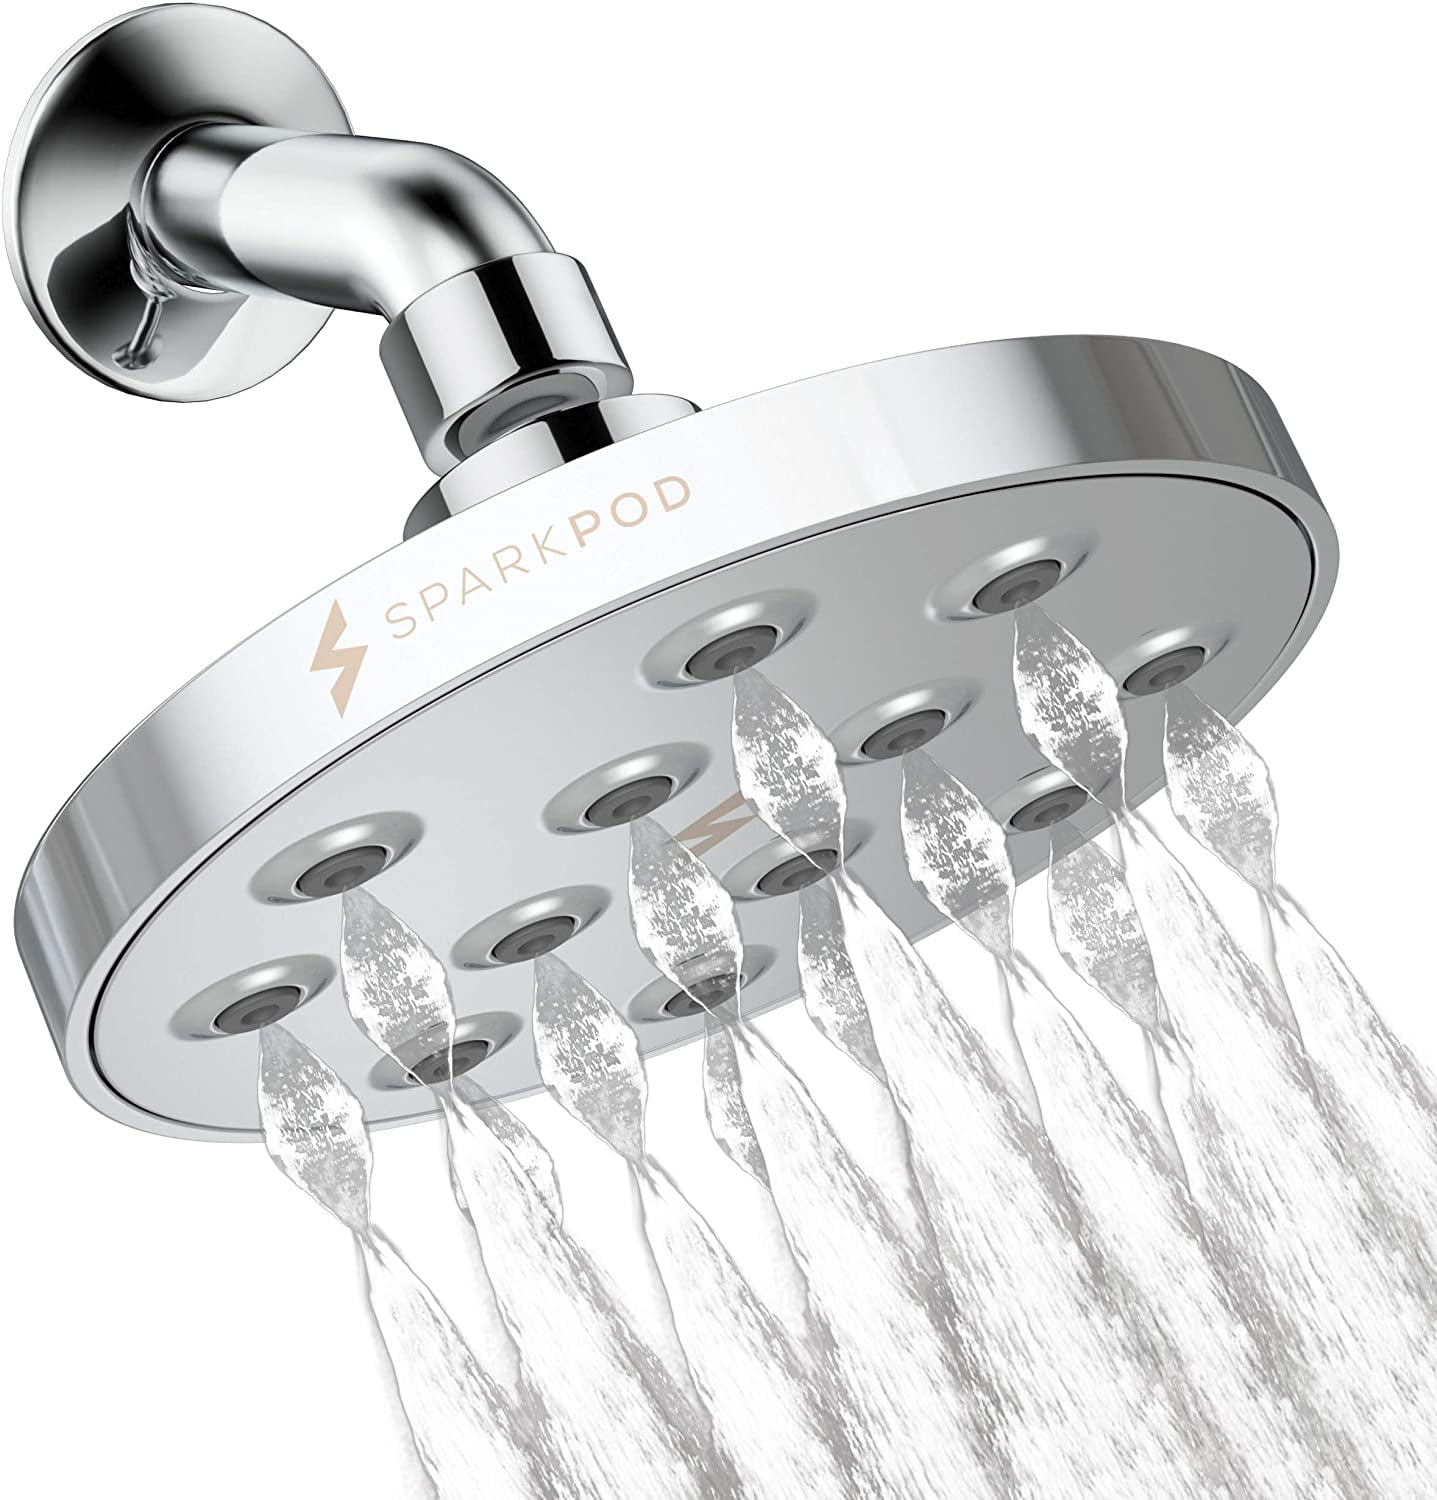 SparkPod Shower Head High Pressure Rain Luxury Modern Look Easy Tool Free 3271 